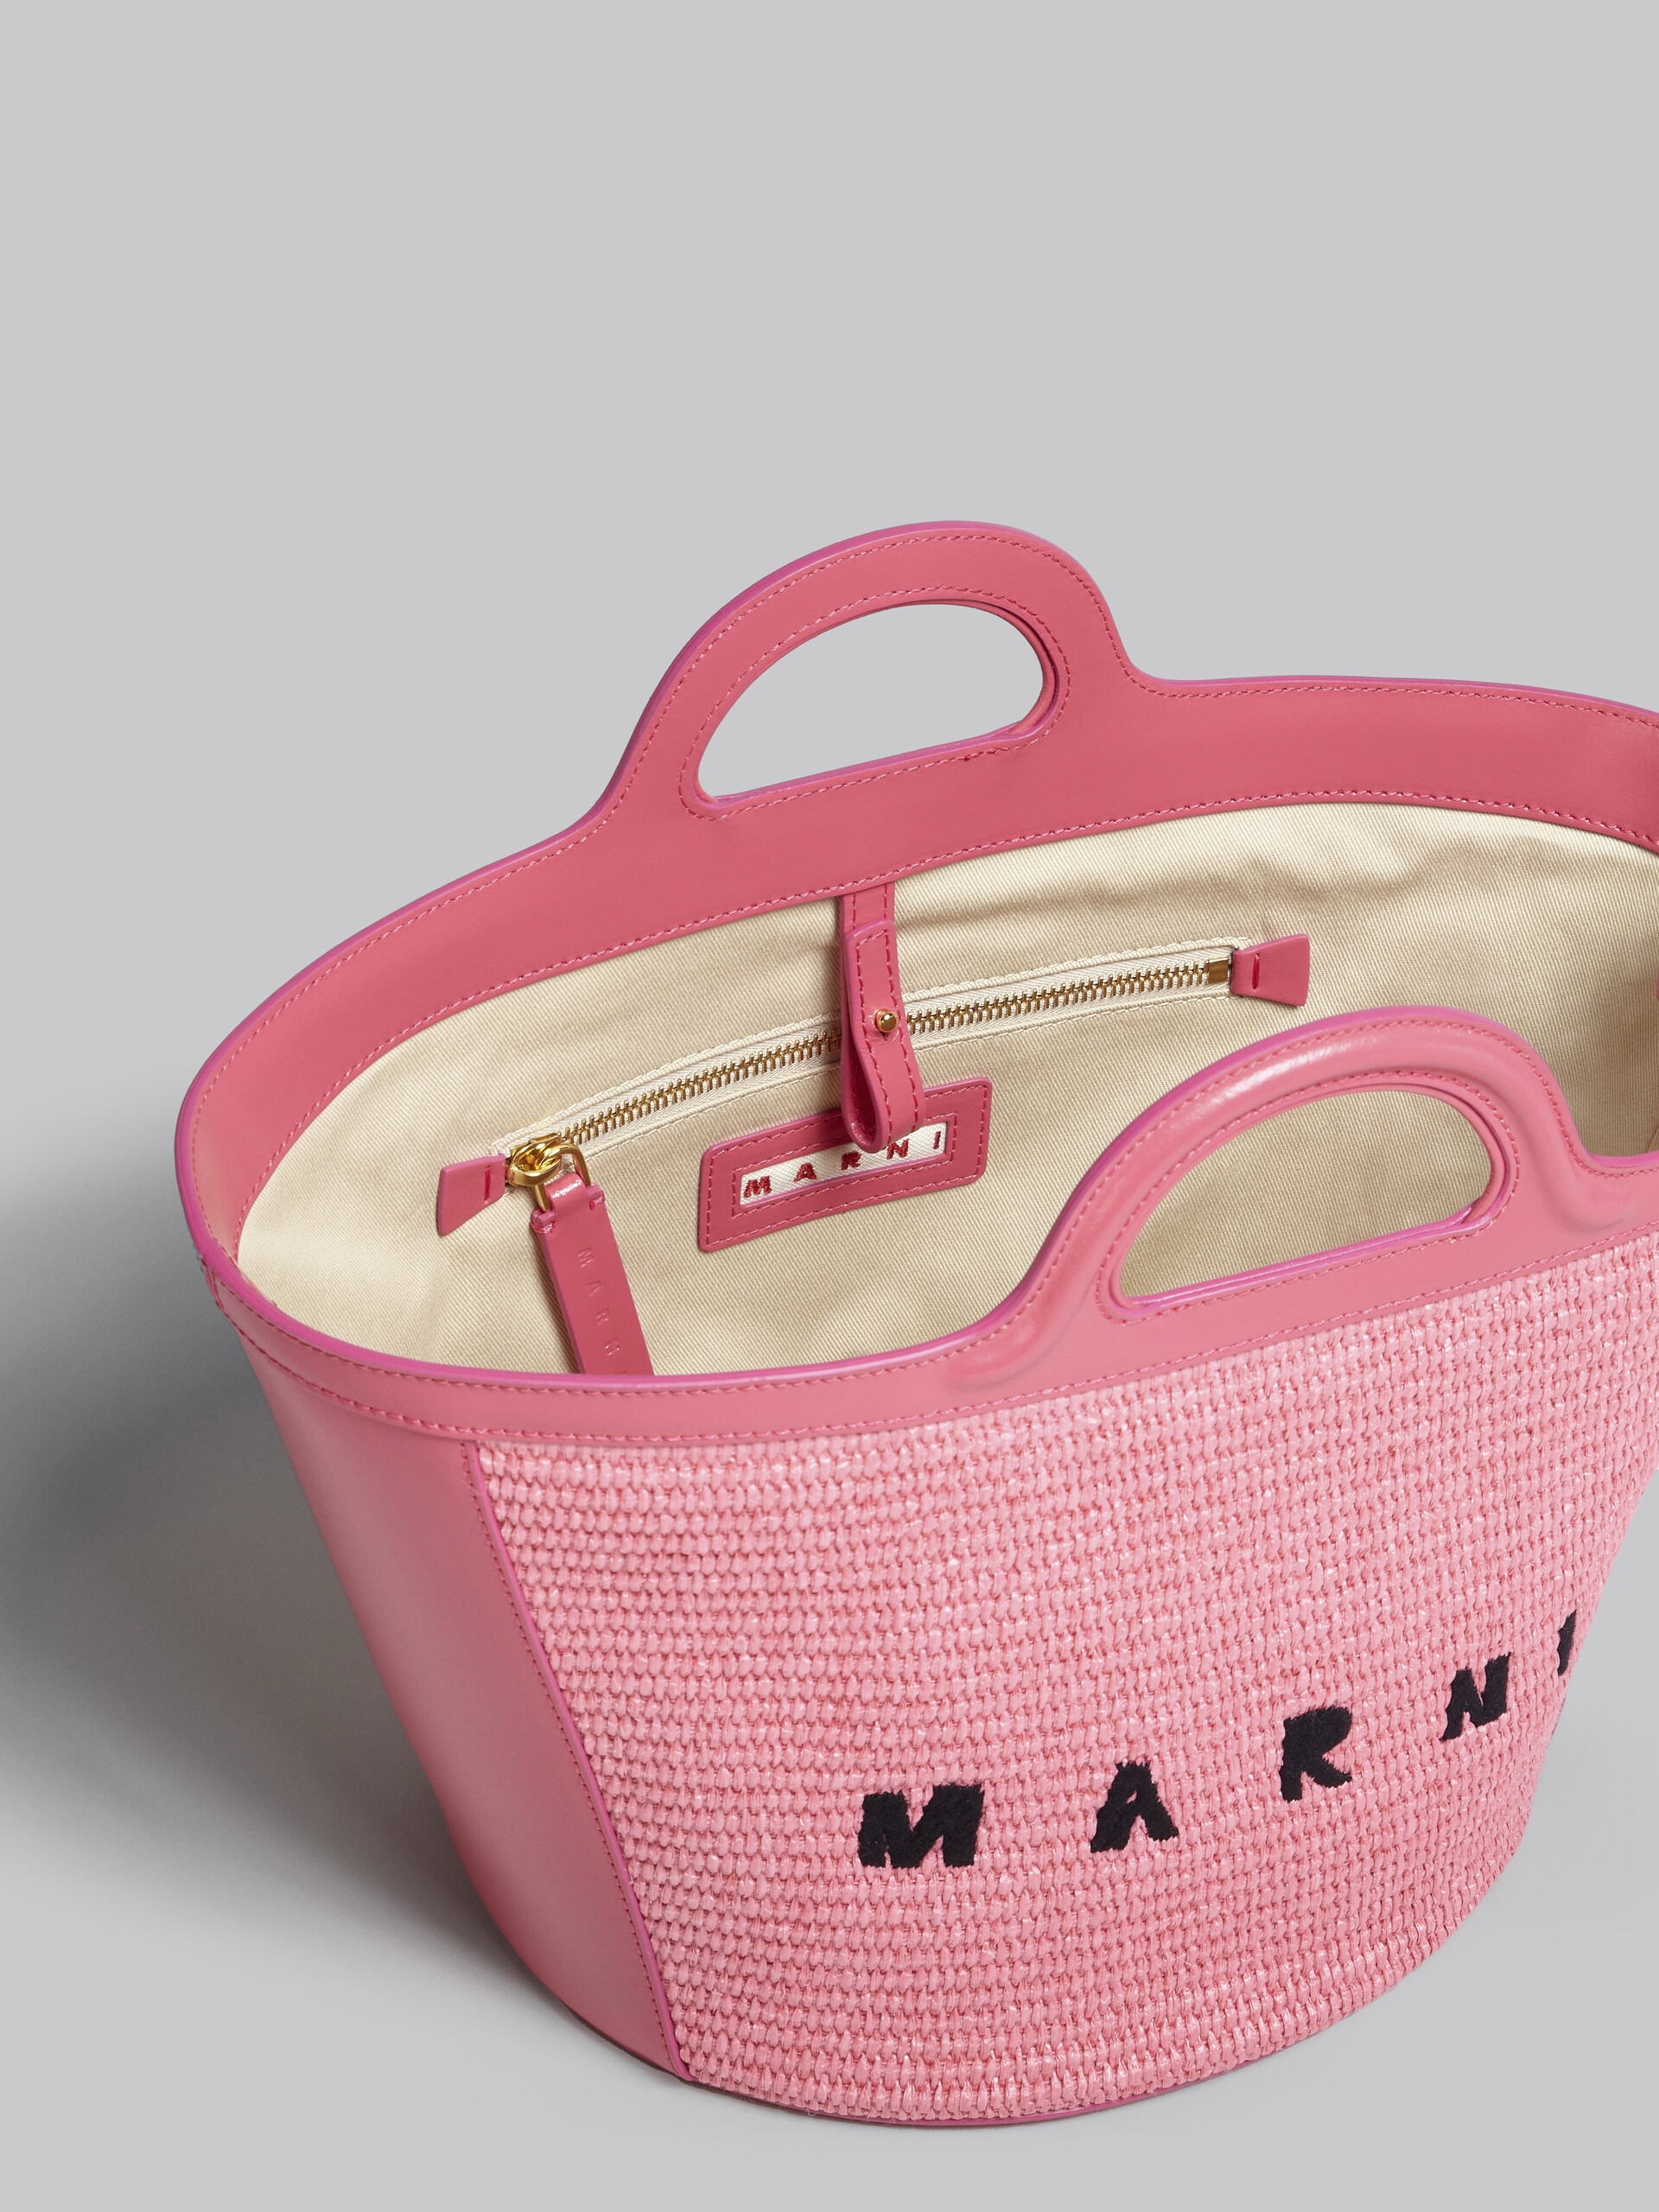 TROPICALIA small bag in pink leather and raffia - Handbag - Image 4